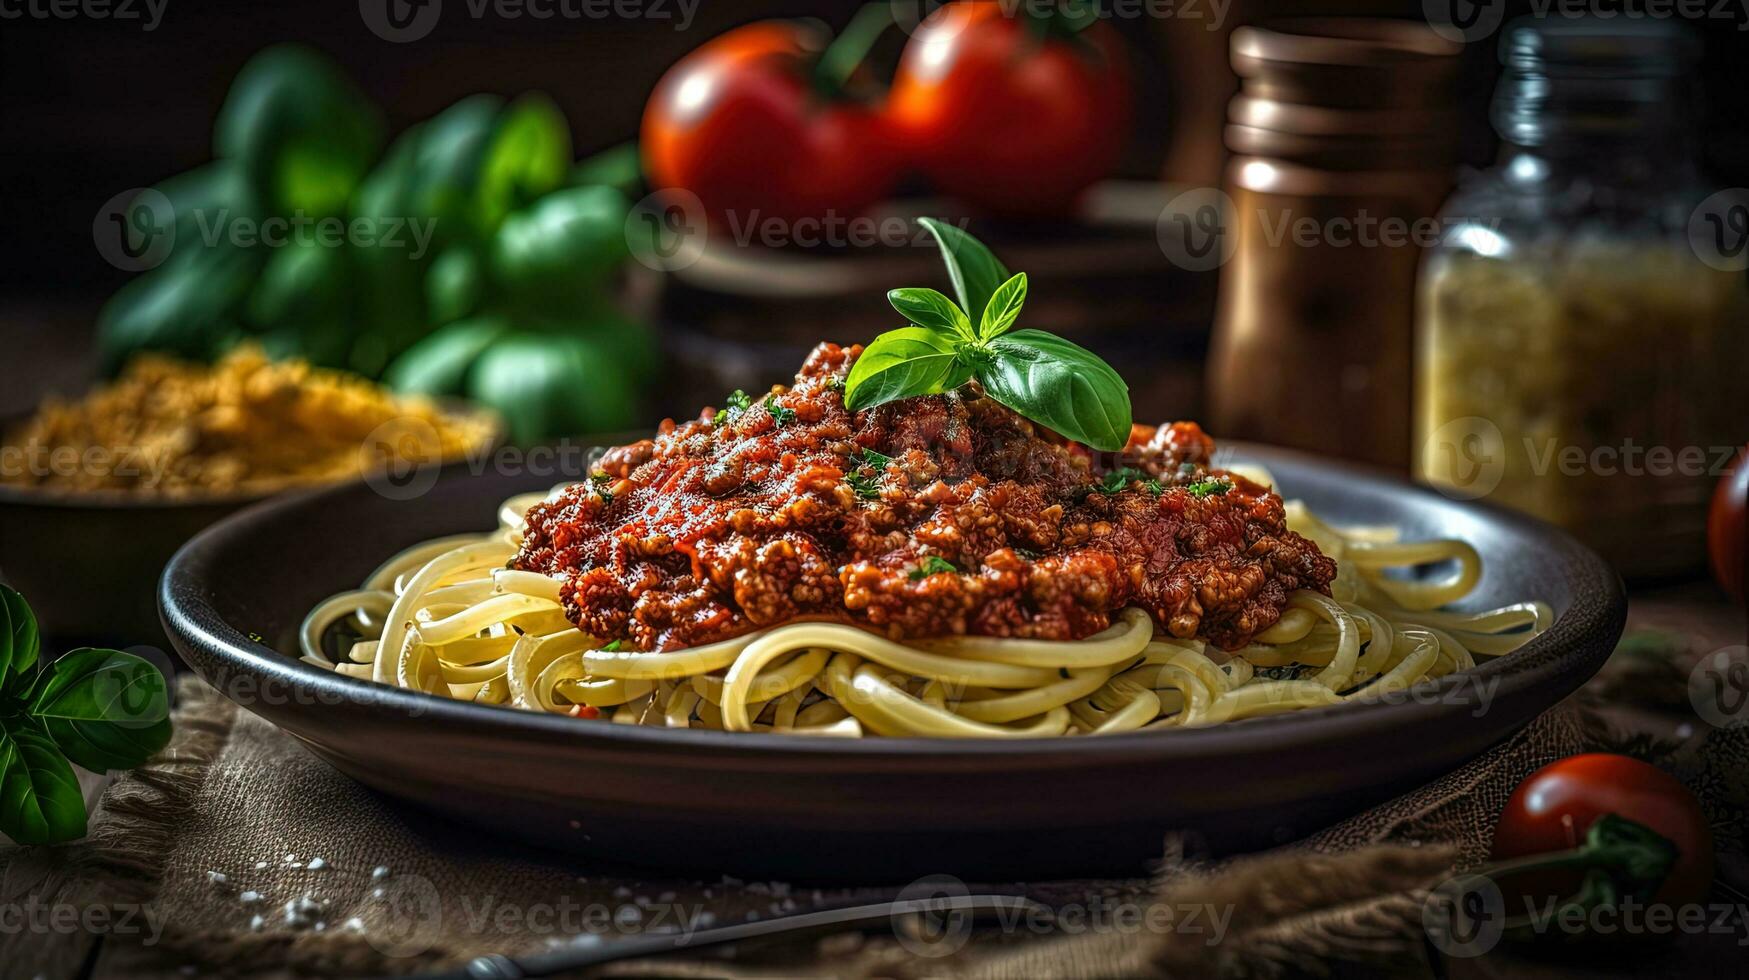 italiano comida de cerca disparos de delicioso espaguetis boloñesa con Fresco ingredientes en rústico mesa. foto